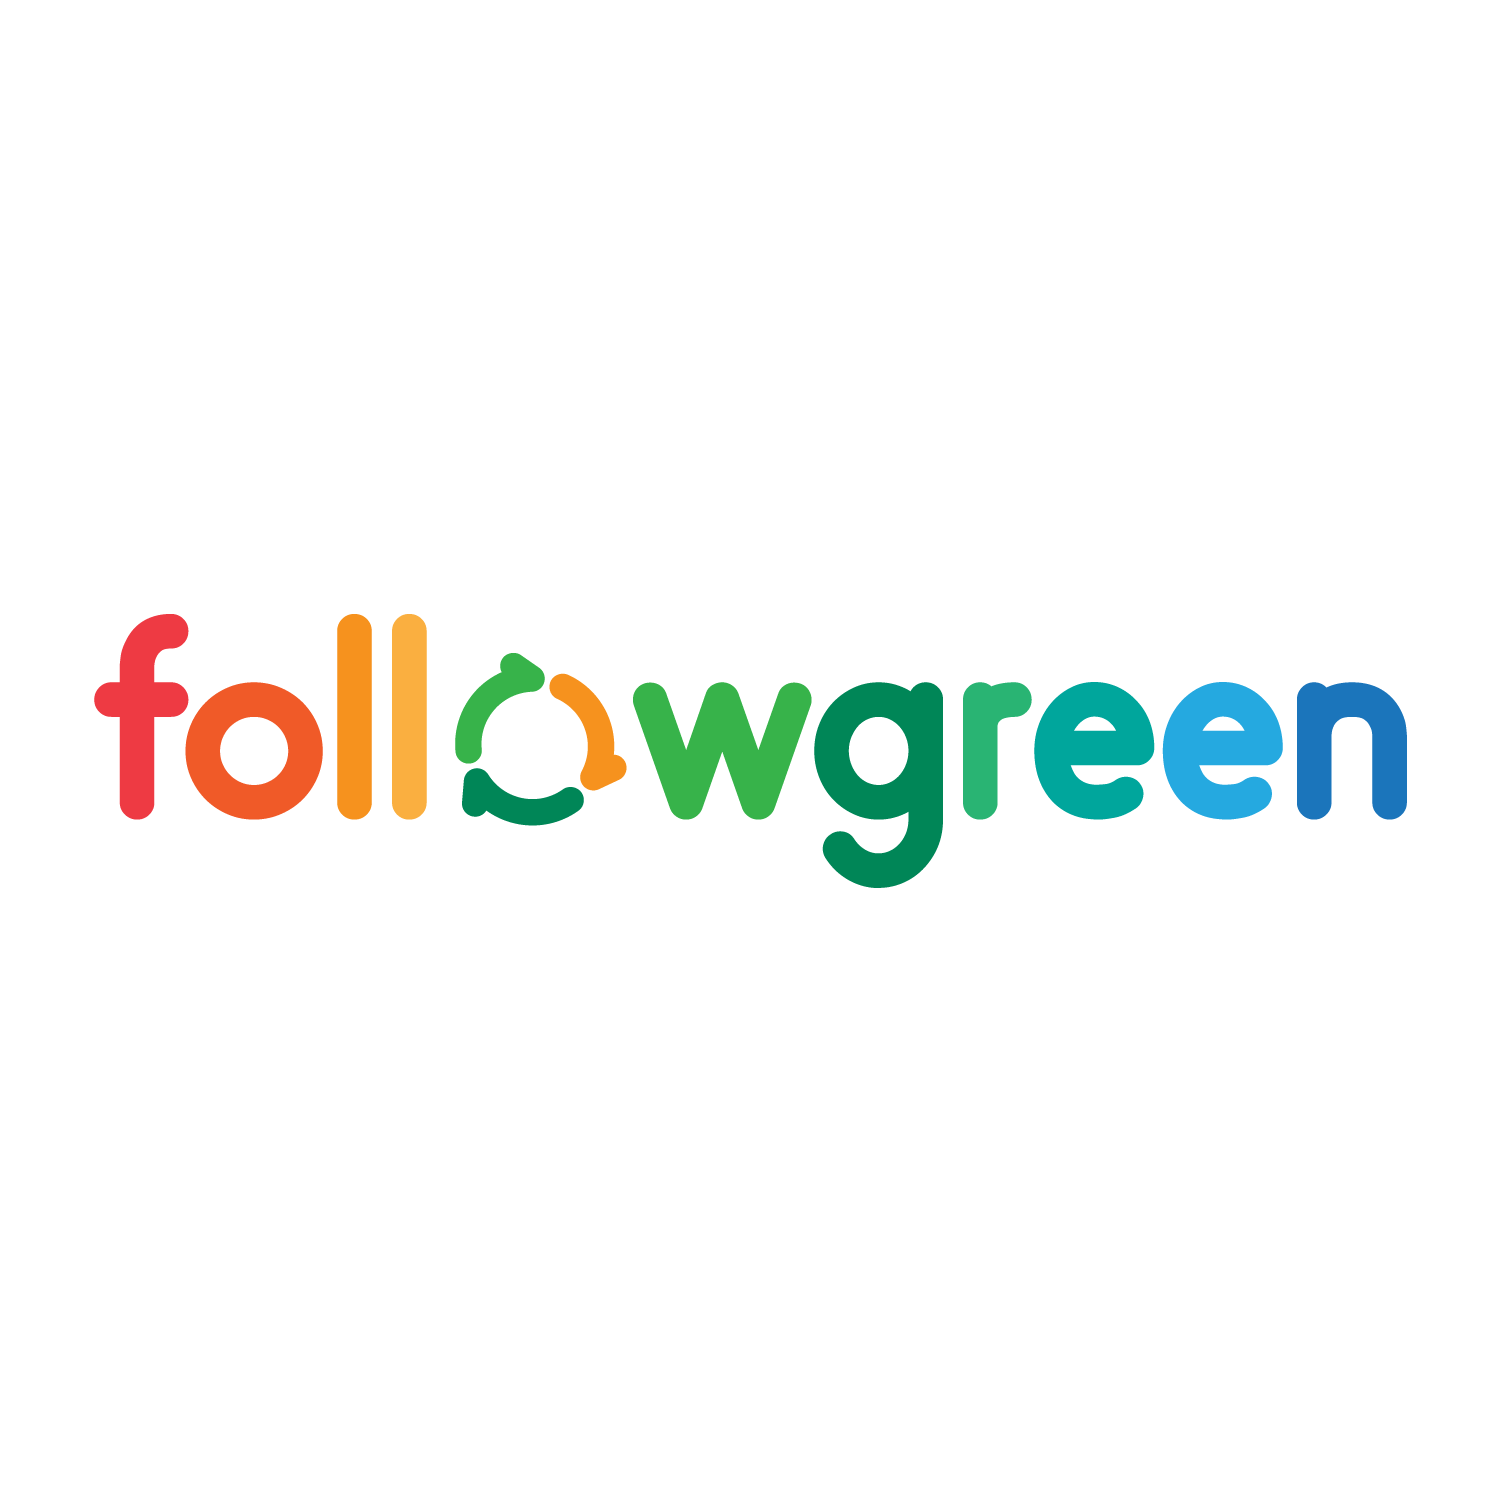 followgreen